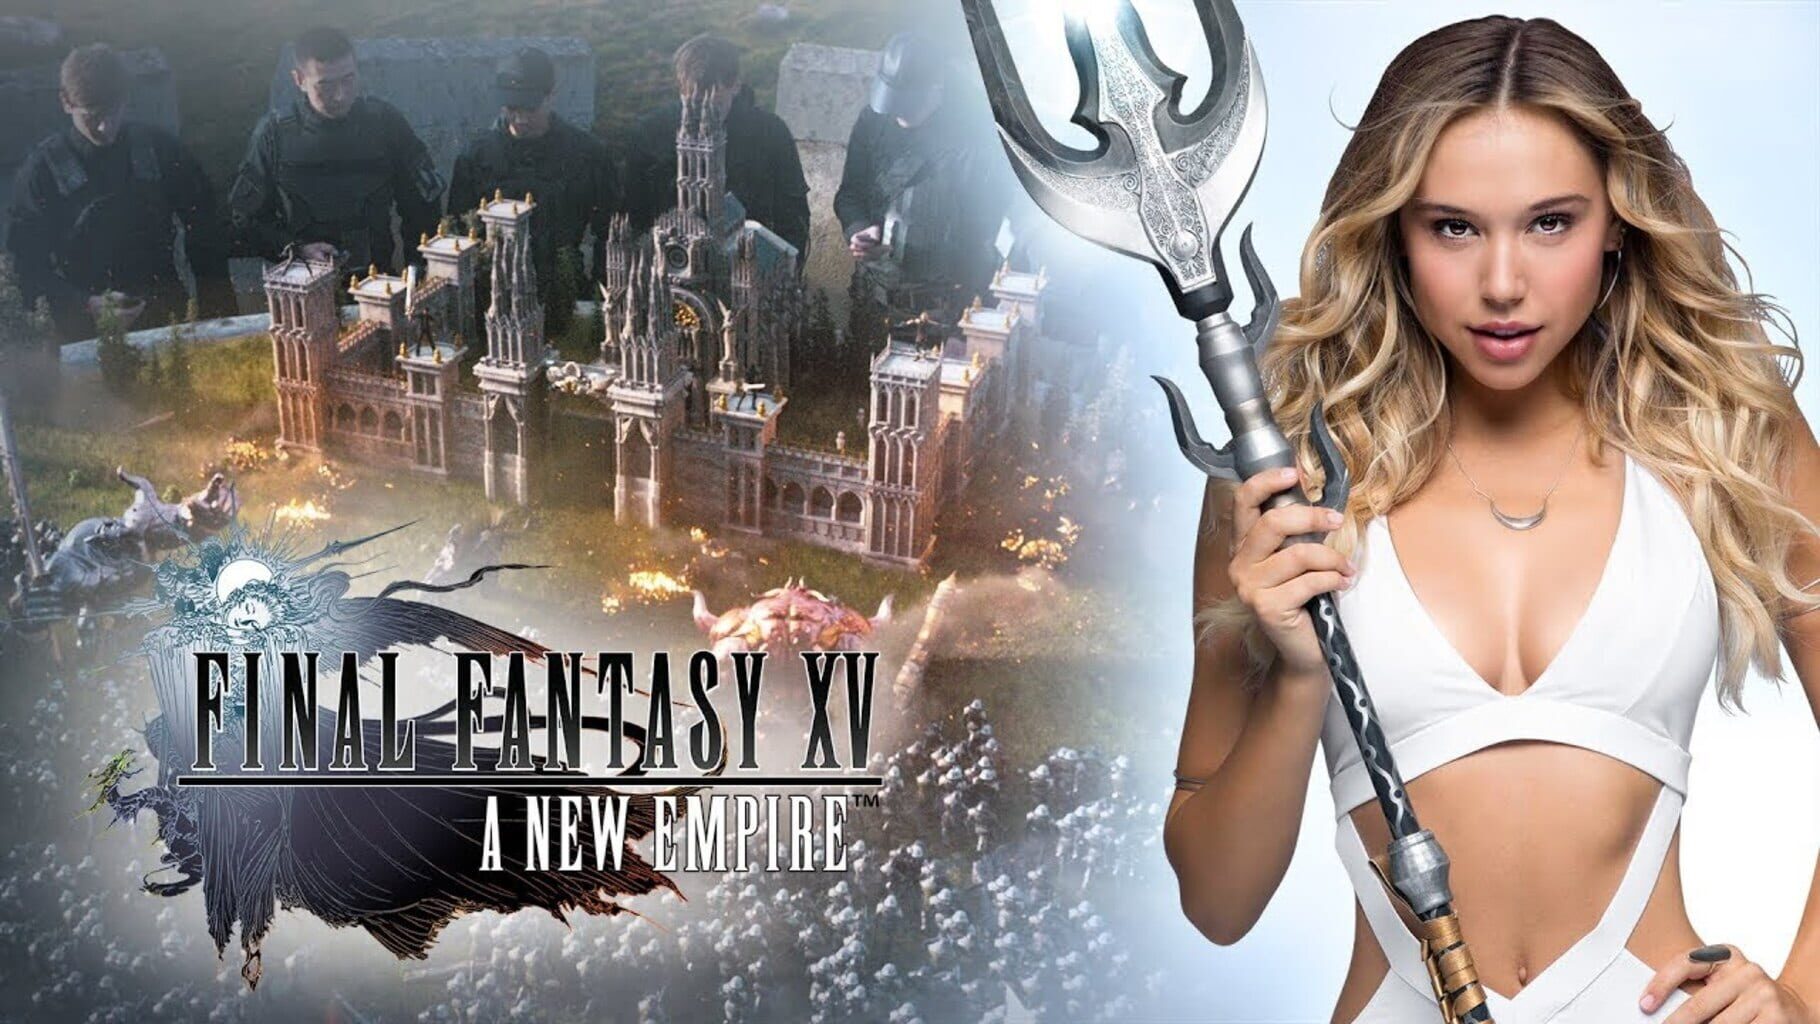 Arte - Final Fantasy XV: A New Empire